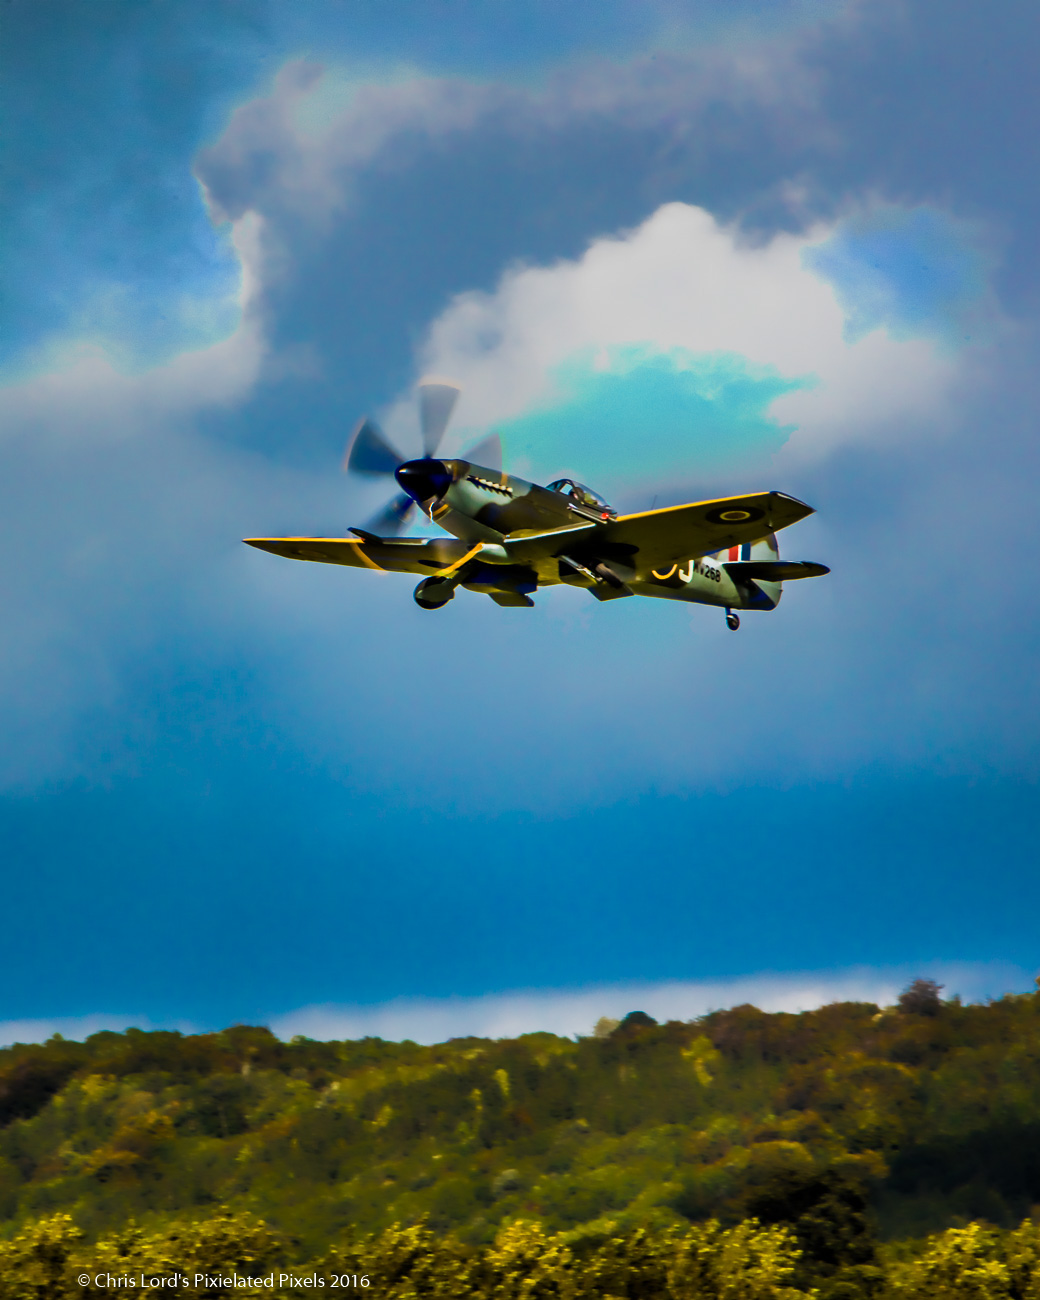 Adobe Portfolio aviation Aircraft airshows planes Photo Manipulation  chris lord pixielated pixels